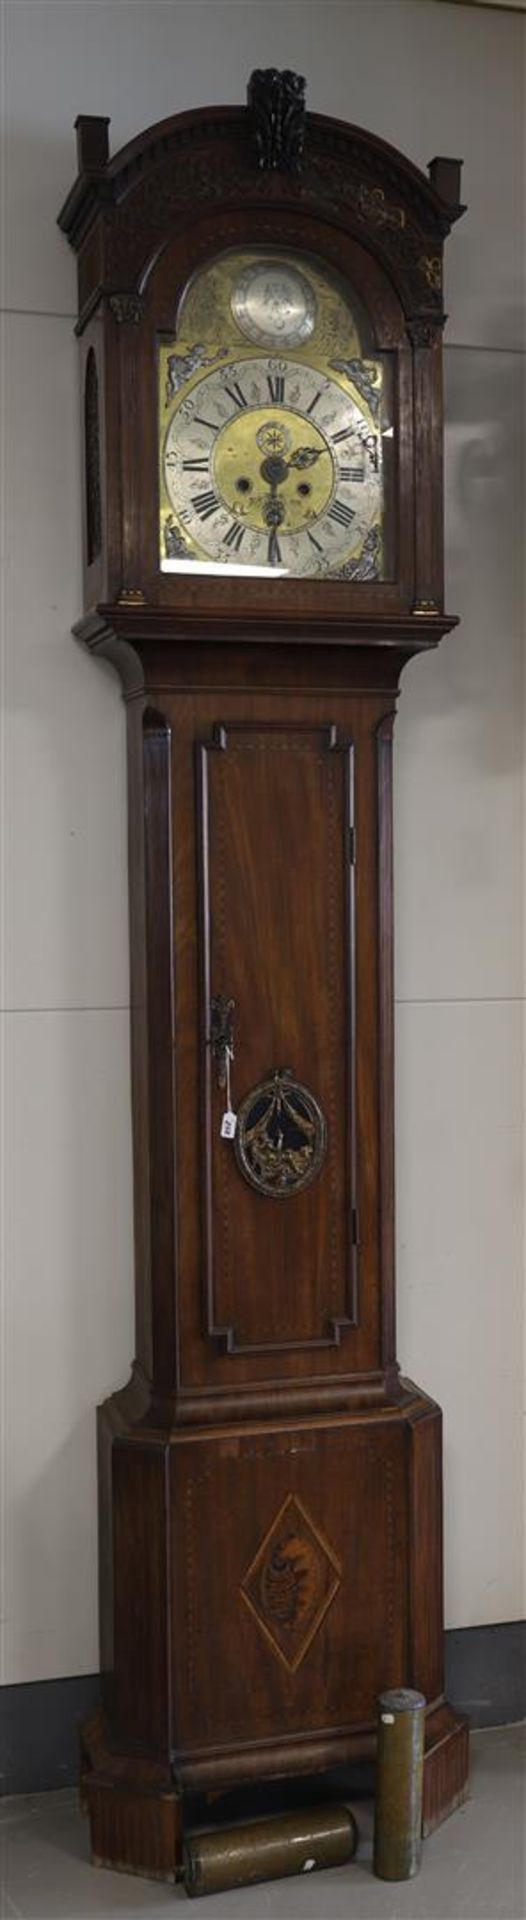 A grandfather clock, Holland 18th century.